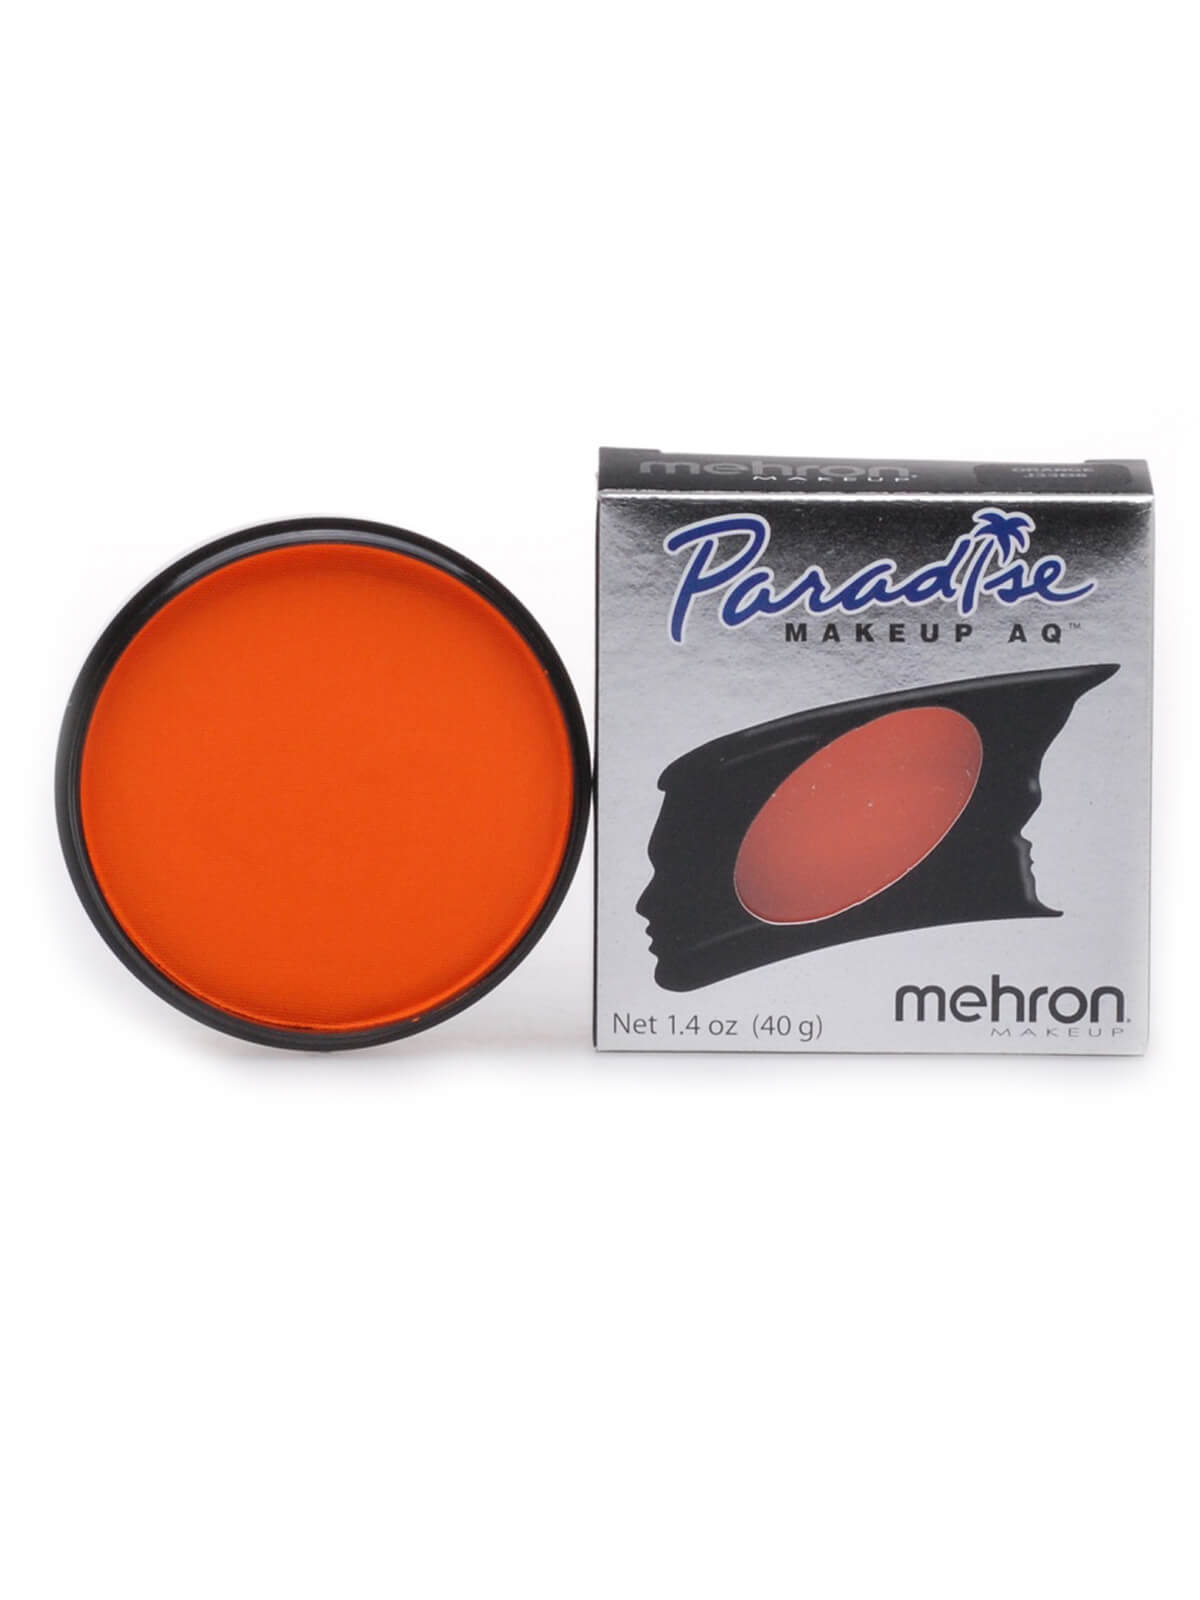 Mehron Paradise Makeup AQ - Basic -Orange